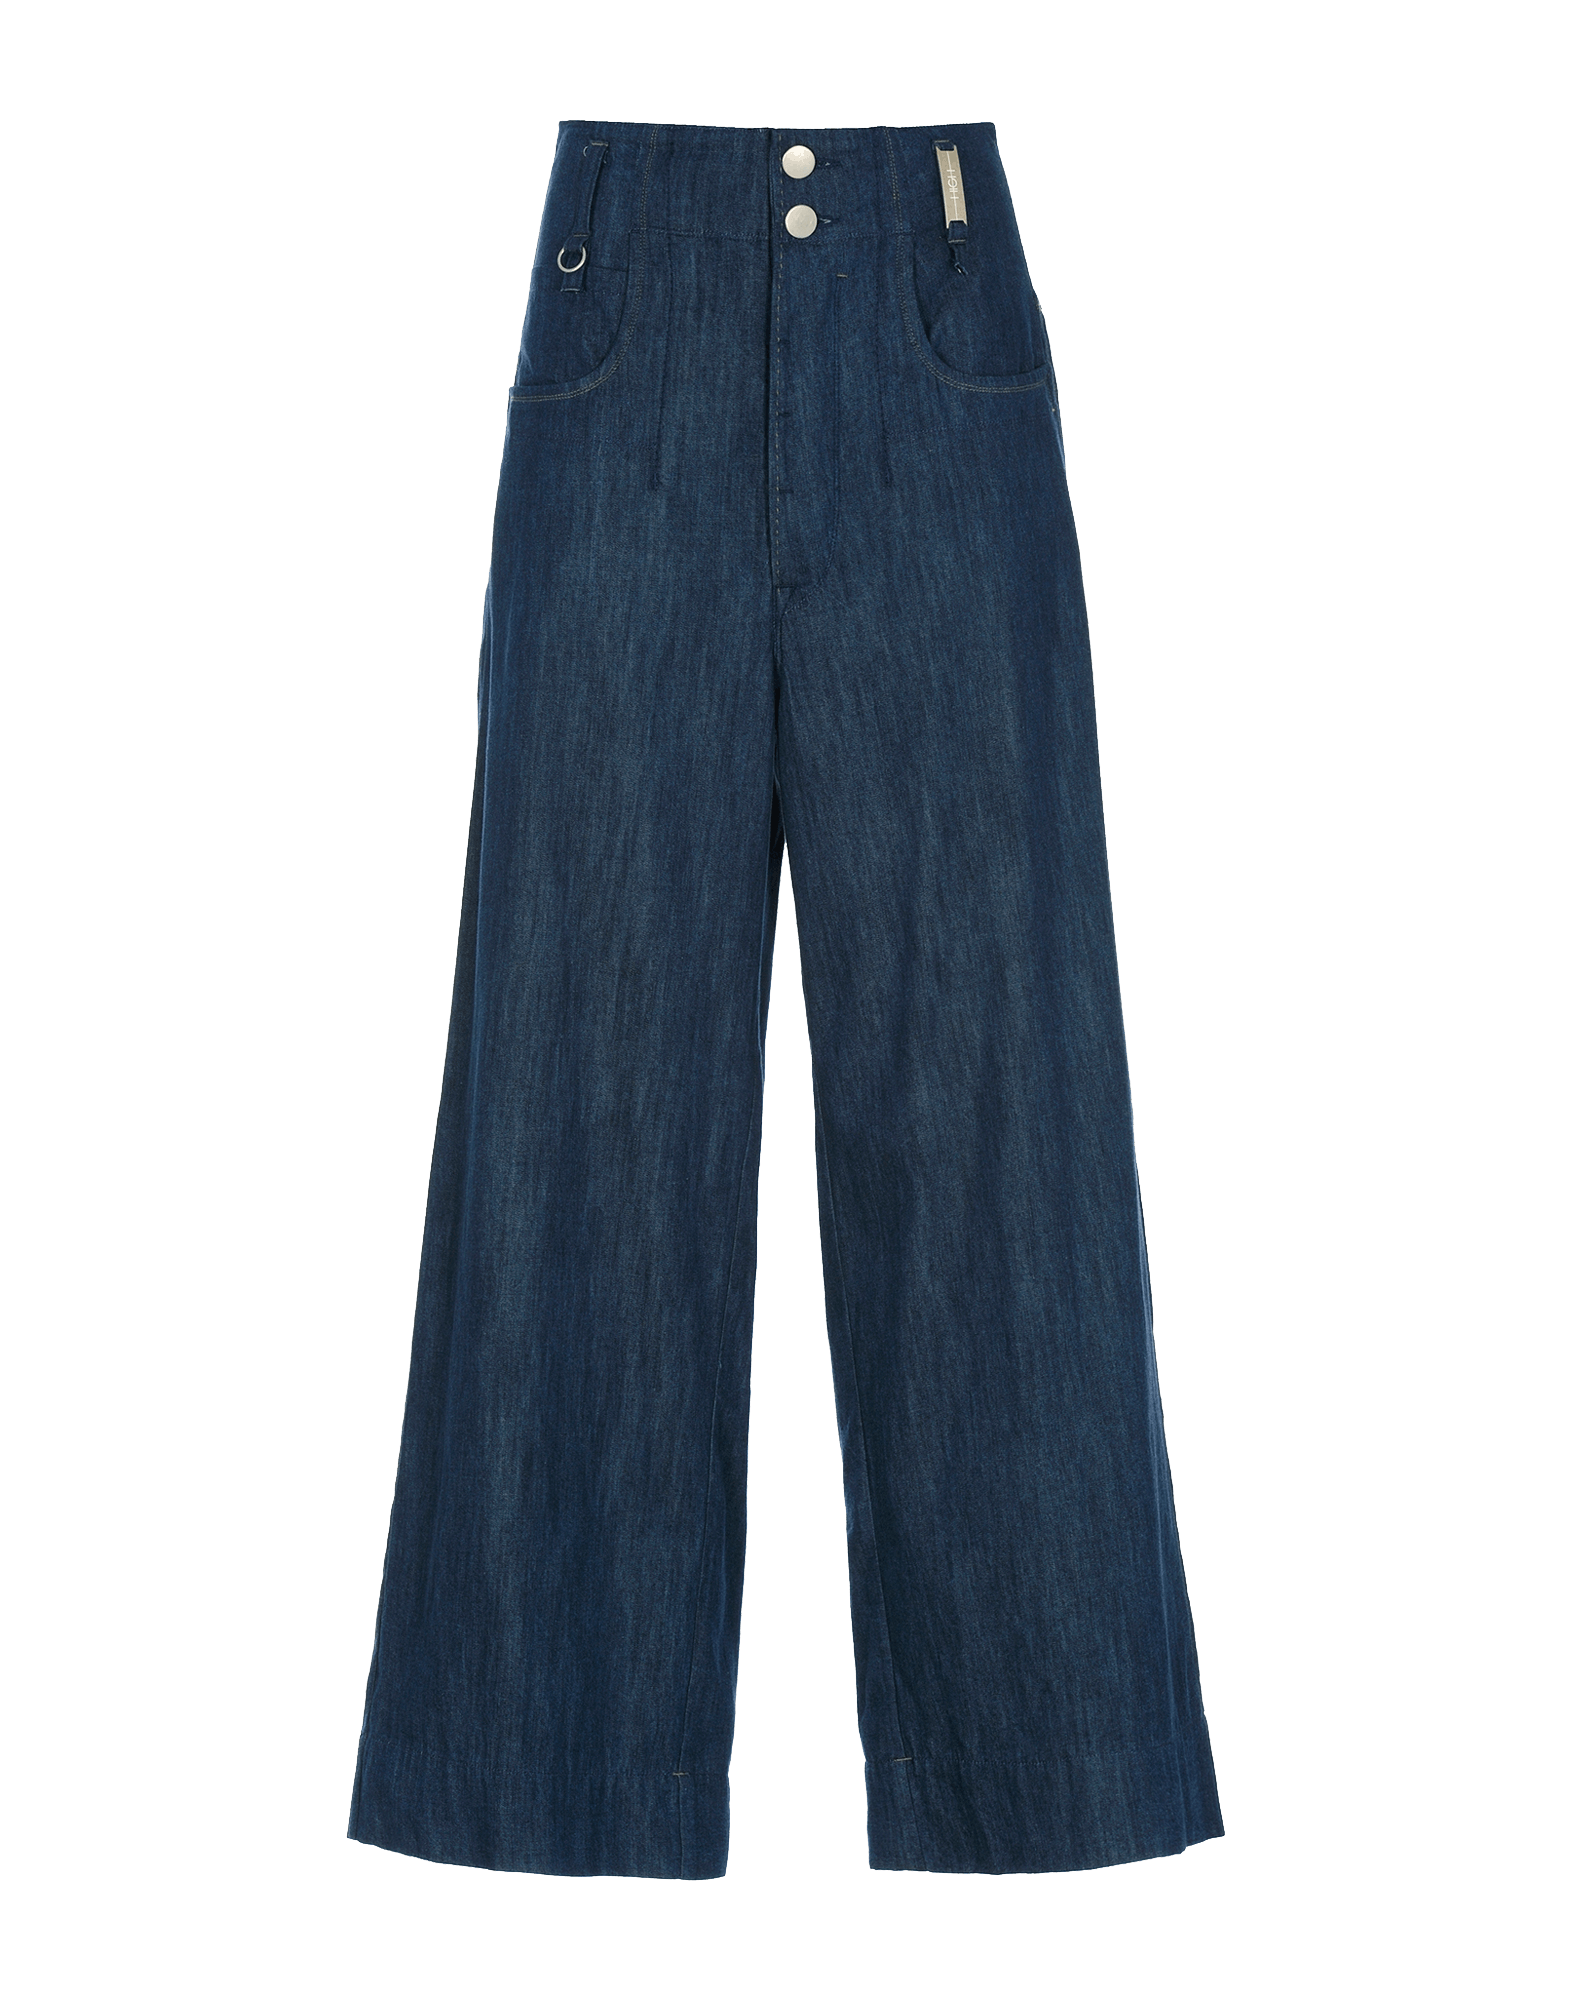 blue harbour regular fit jeans